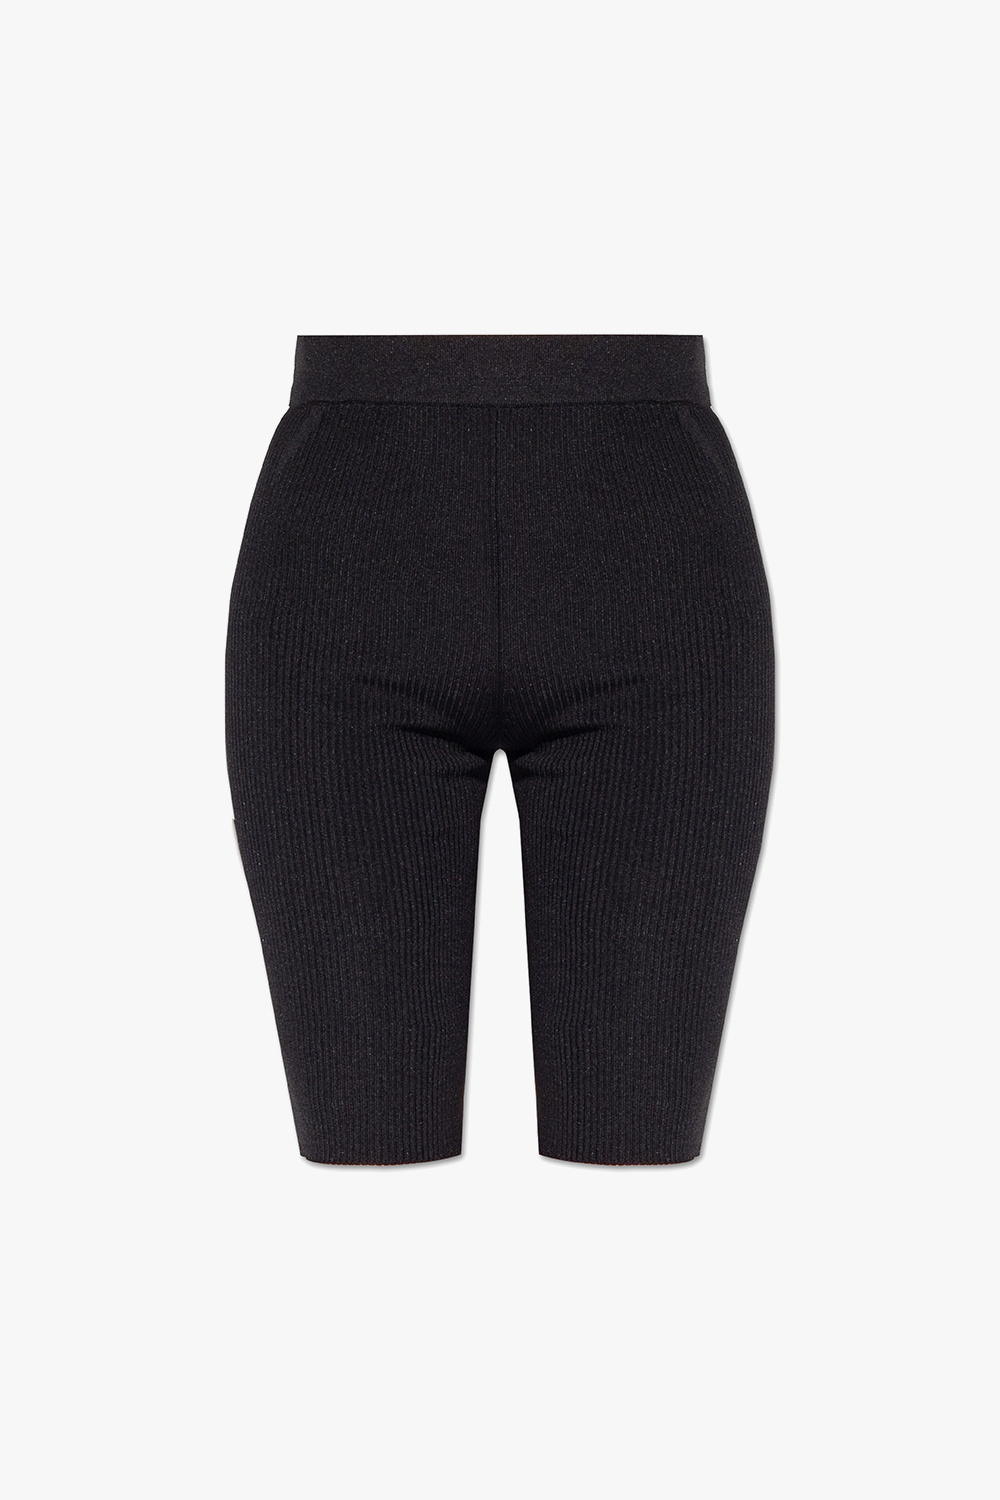 Black 'Lucca' short leggings Jacquemus - Womens Nike Plus Yoga Dri